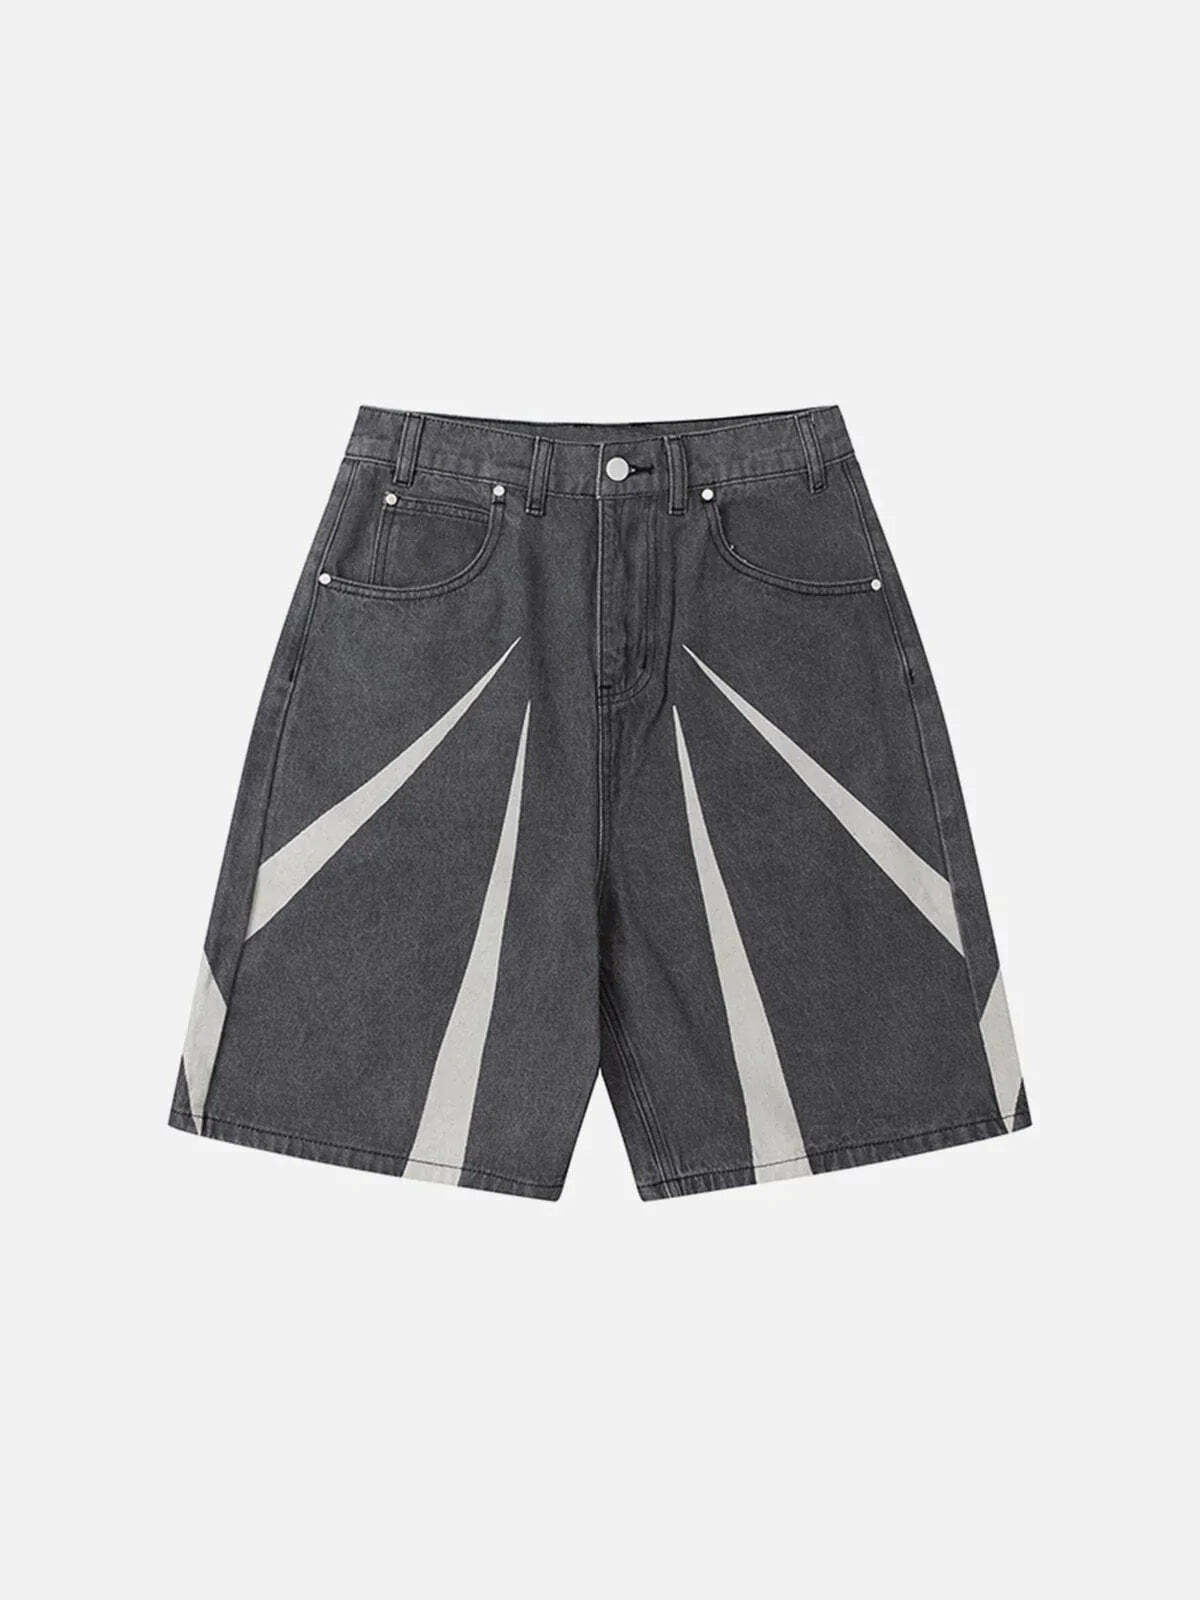 denim patchwork bermuda shorts retro streetwear chic 4575